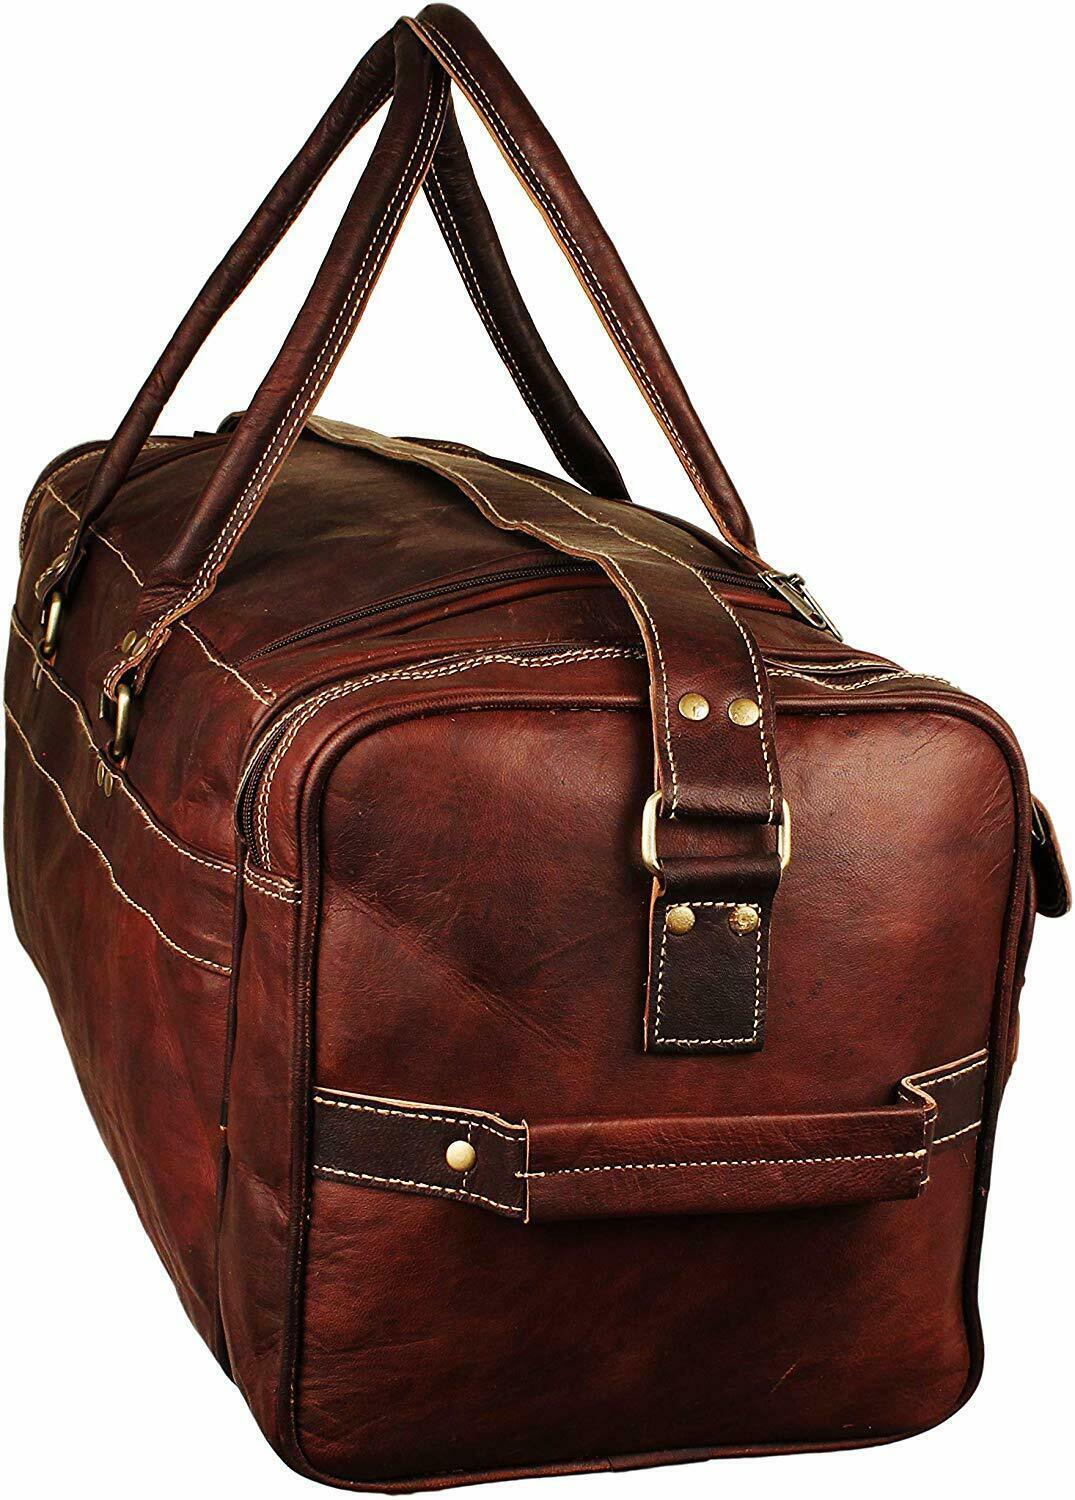 travel size duffel bag